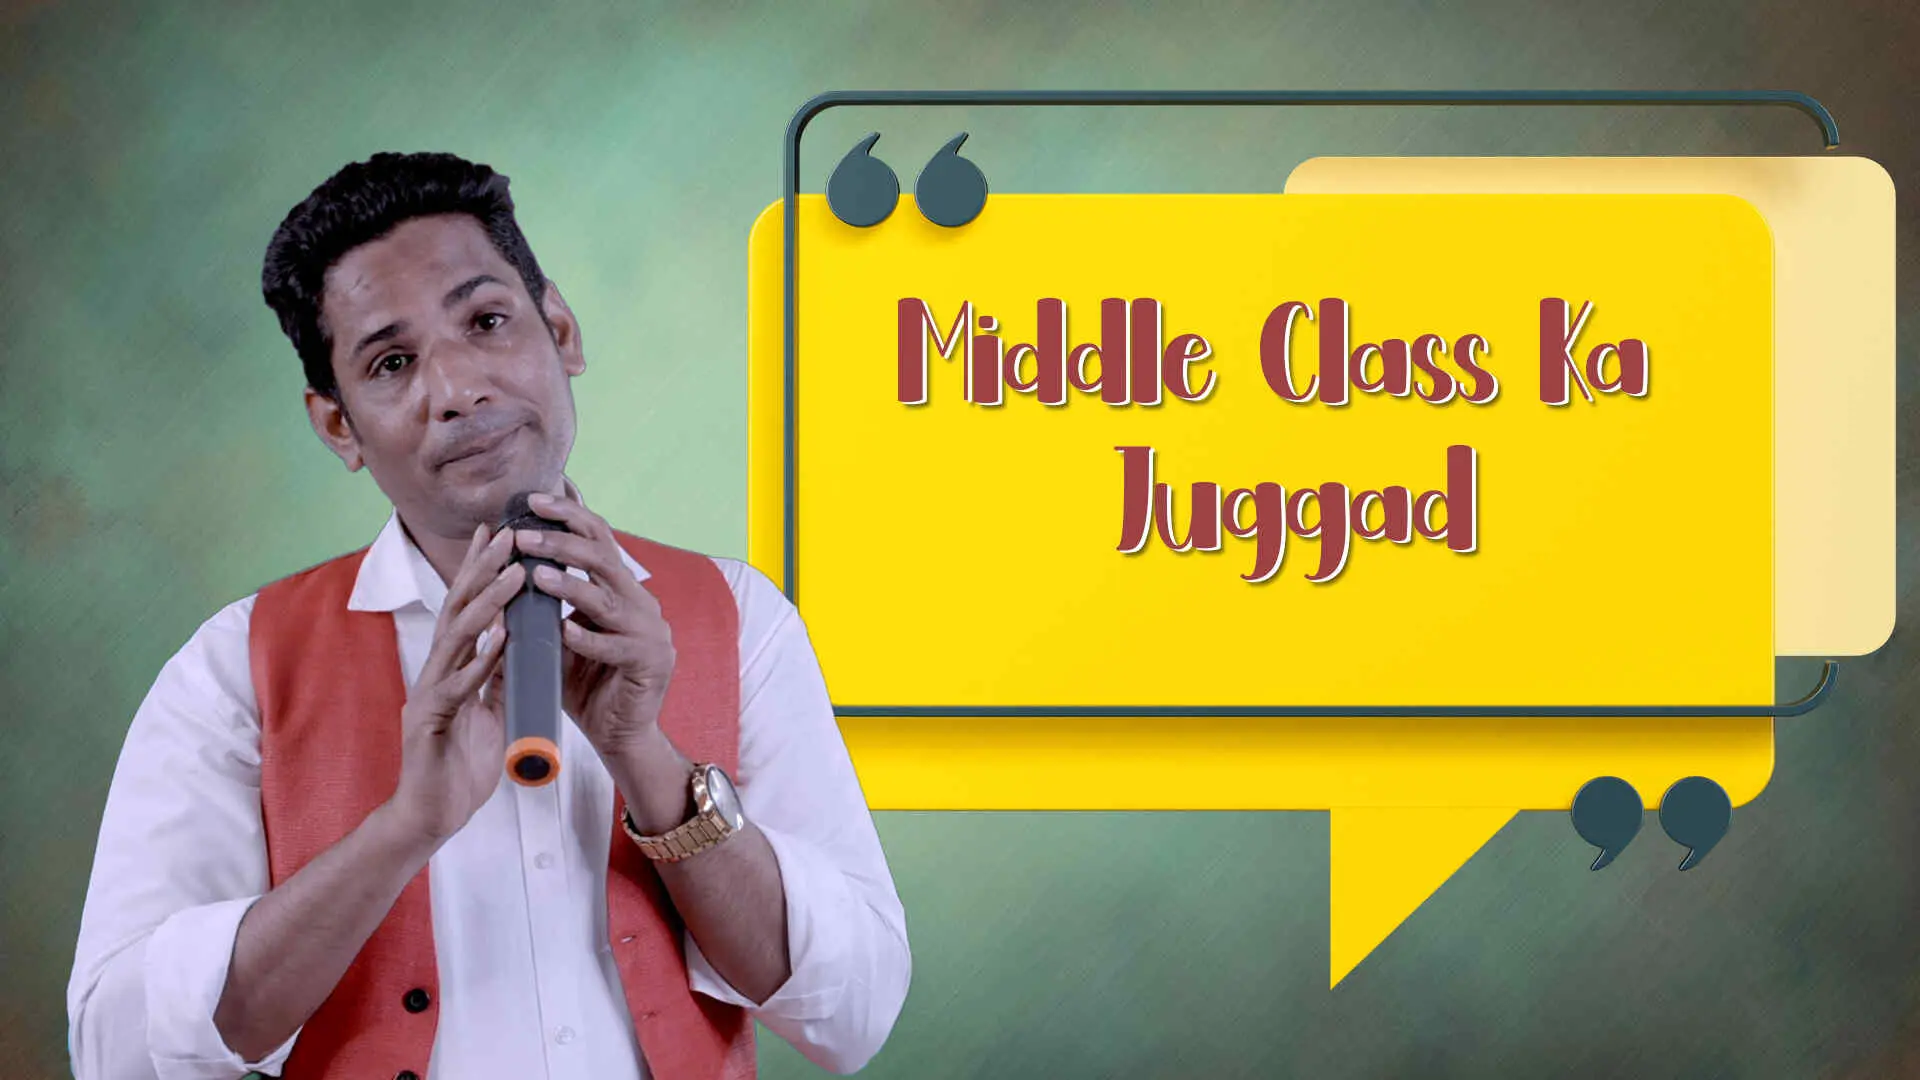 Middle Class Ka Jugaad